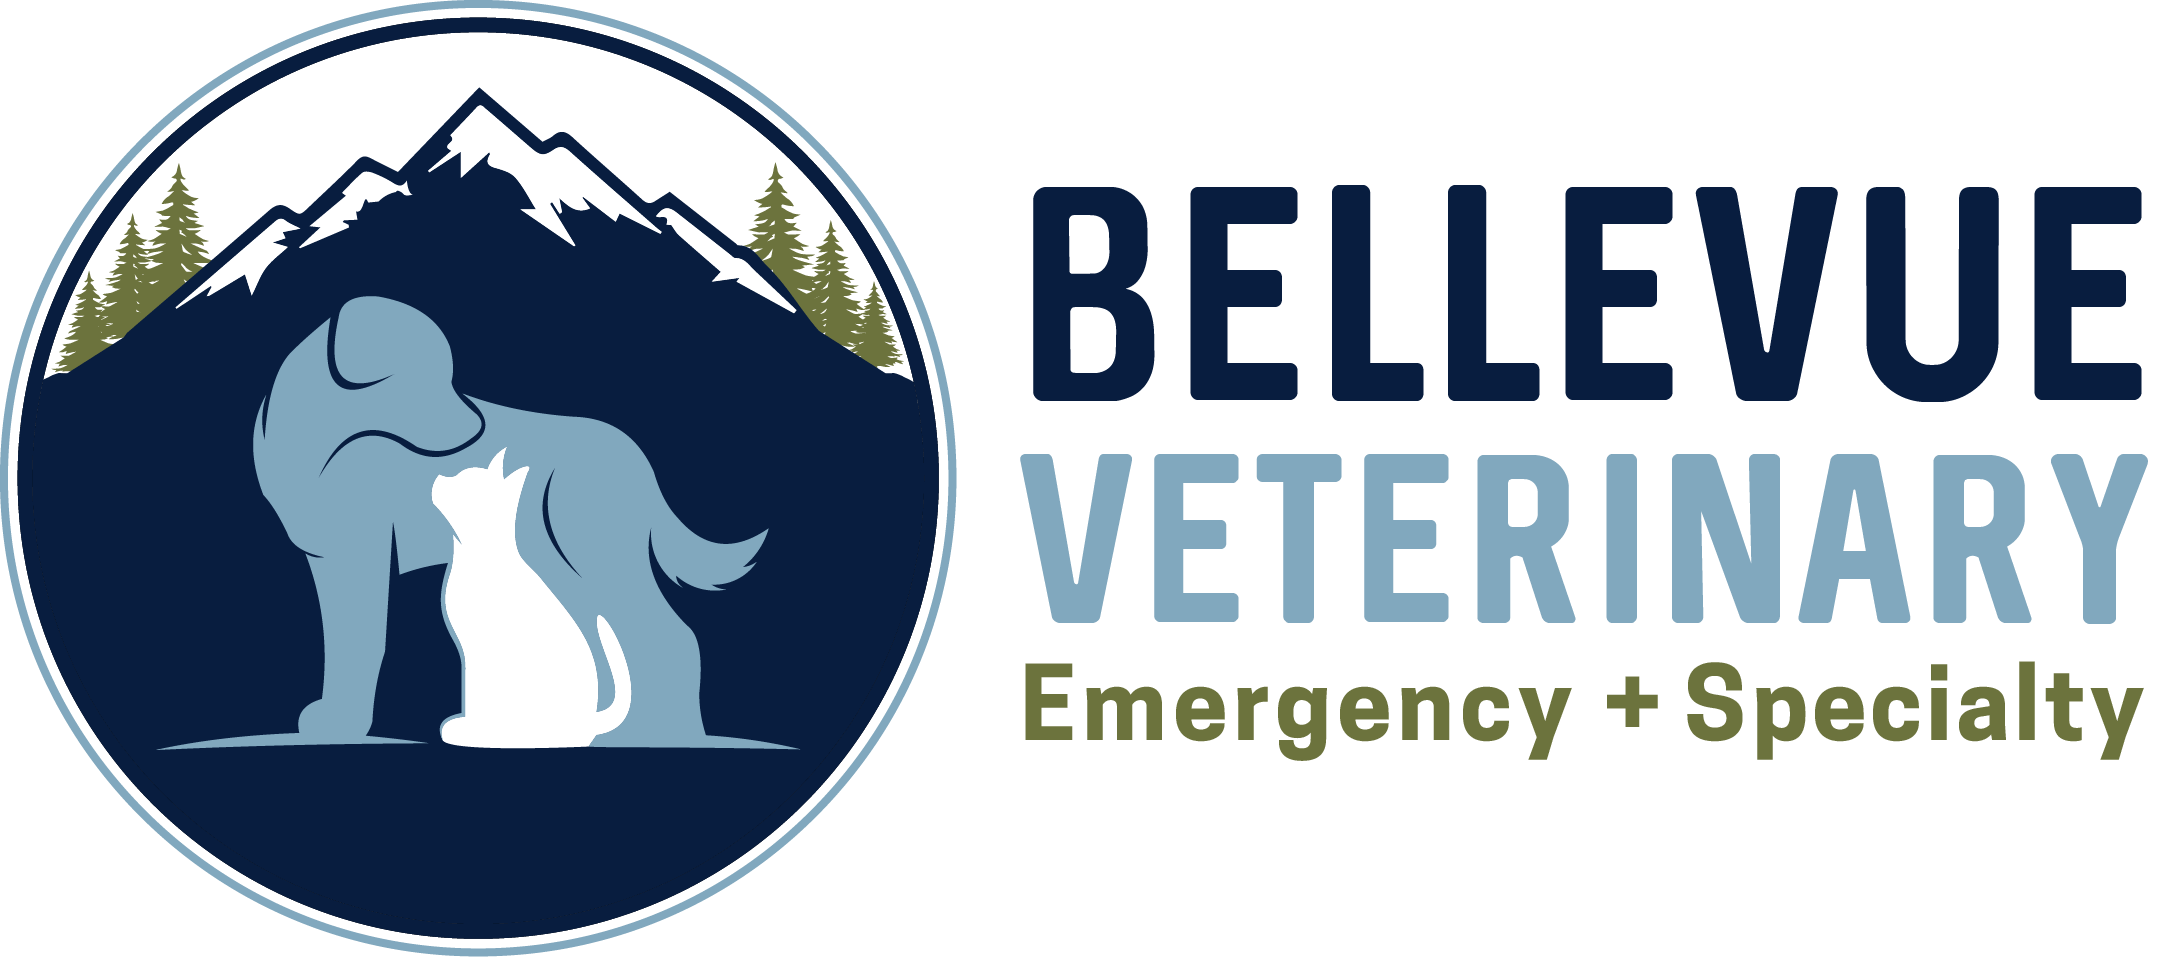 Bellevue Veterinary Emergency + Specialty